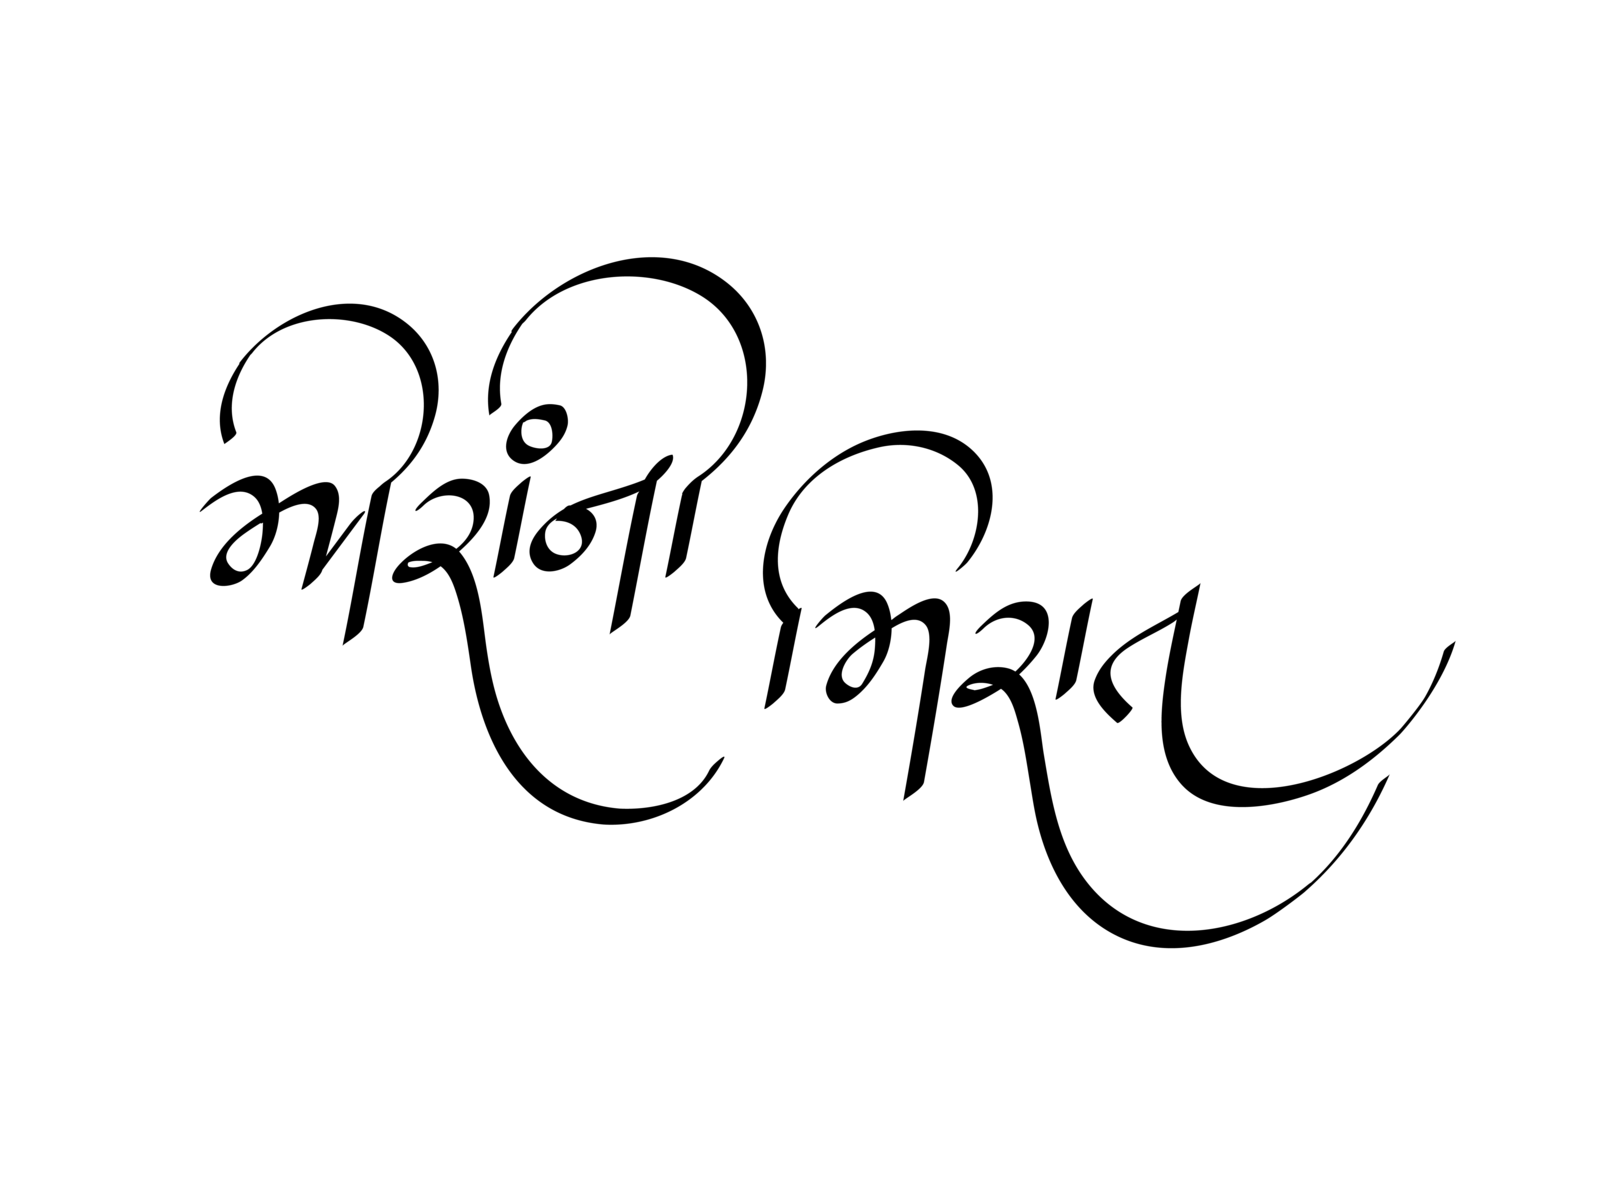 hari gujarati font free download